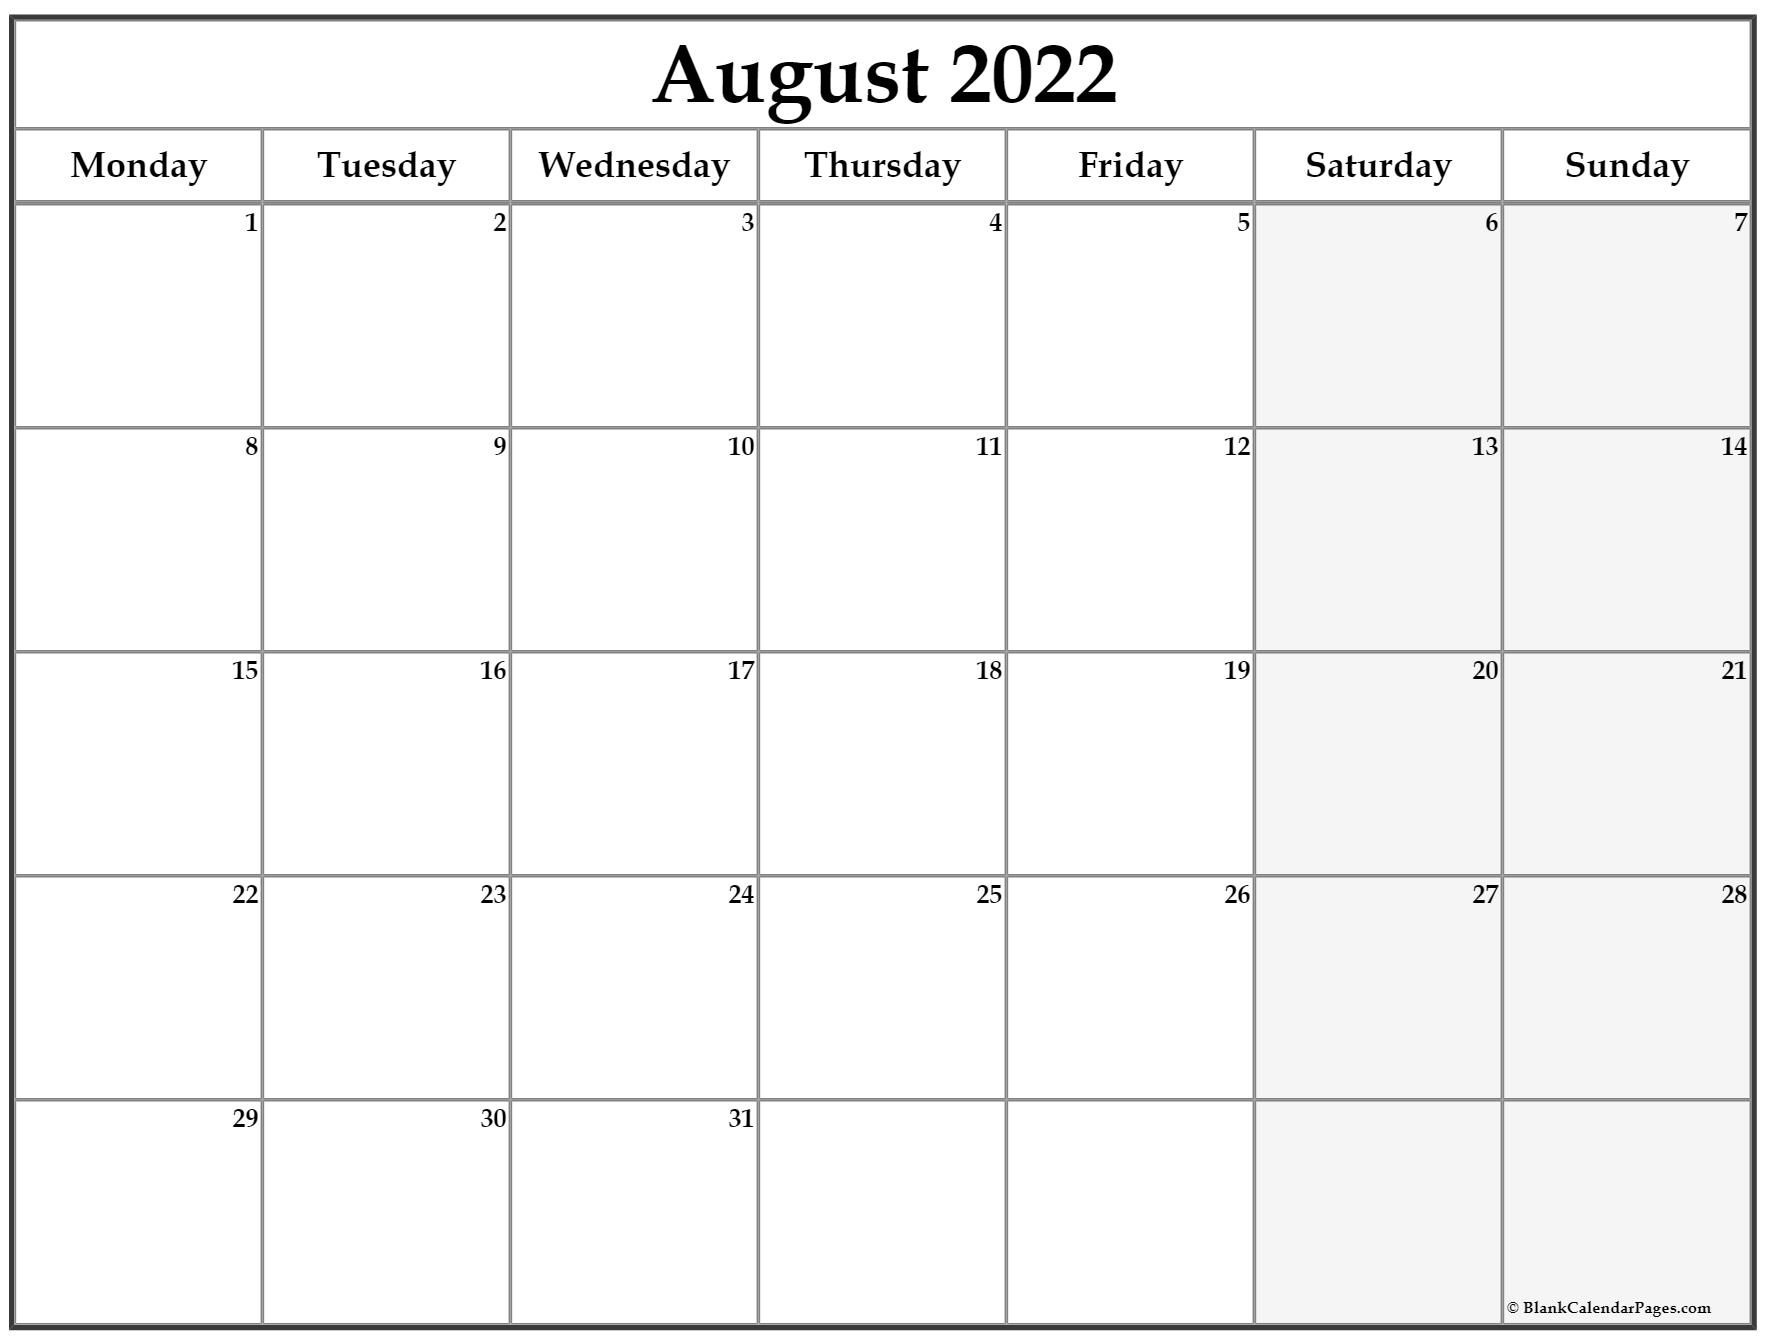 August 2022 Monday Calendar | Monday To Sunday